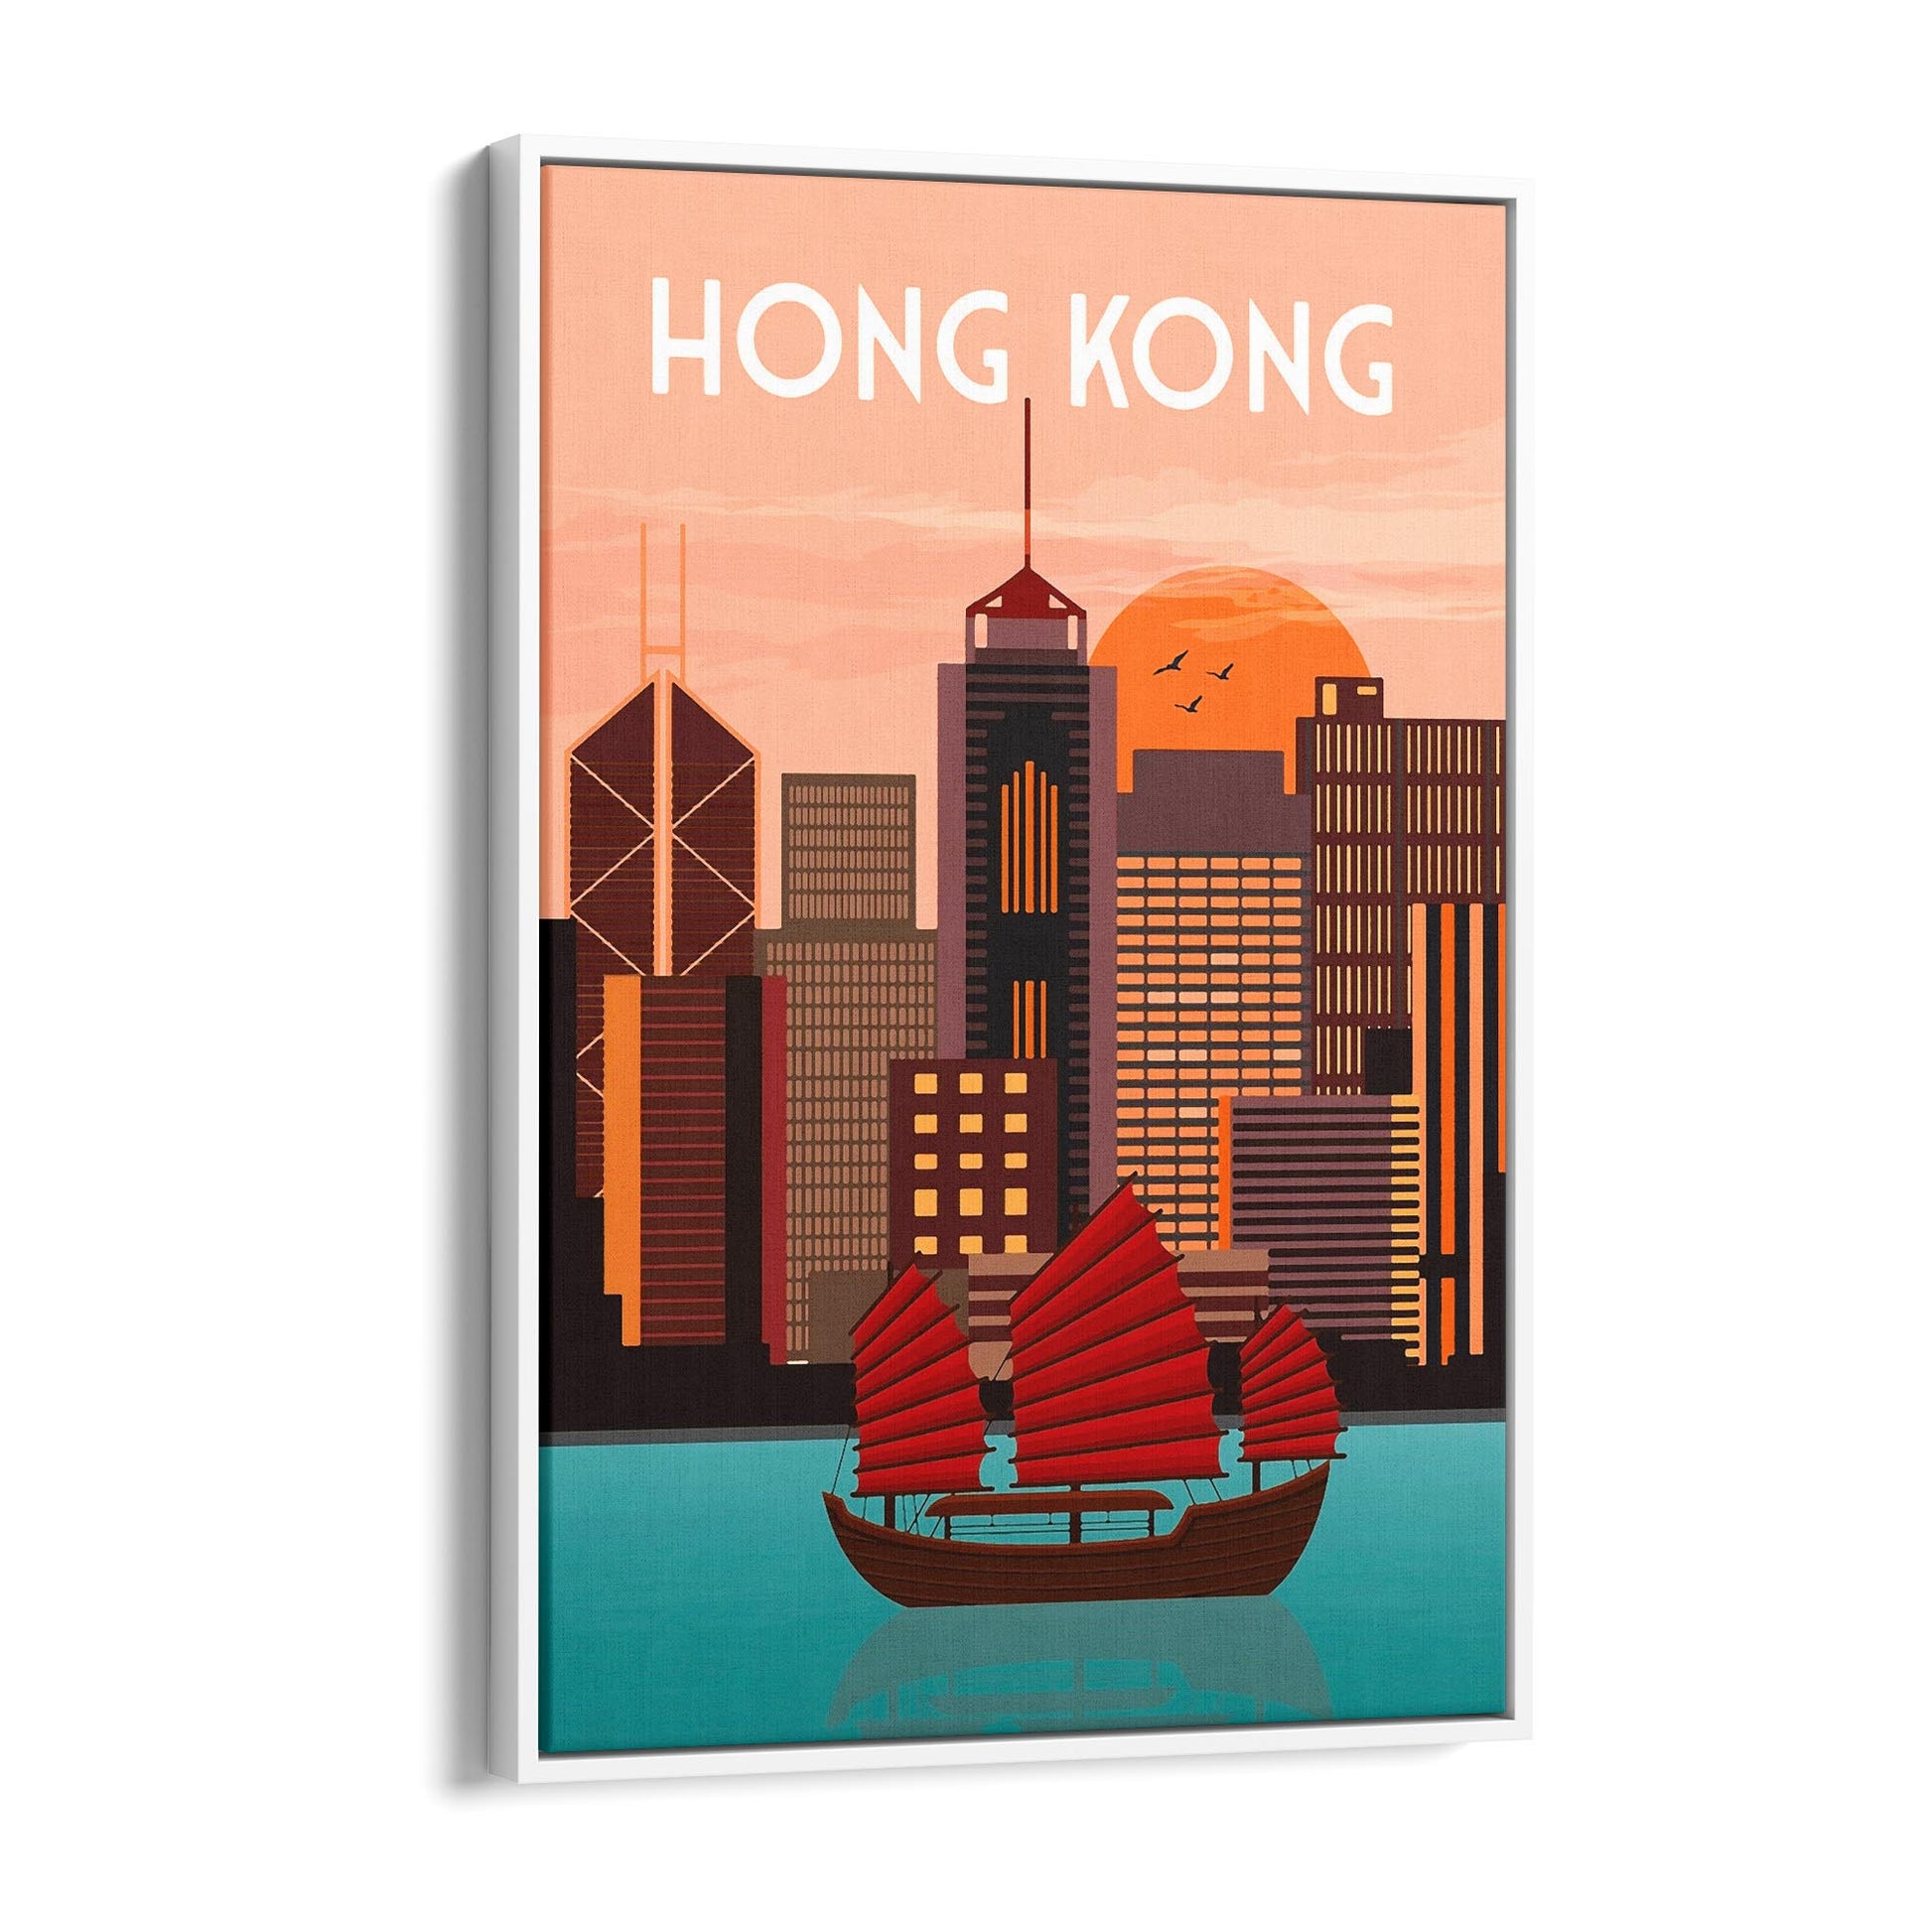 Retro Hong Kong Travel Advert Wall Art - Portsby